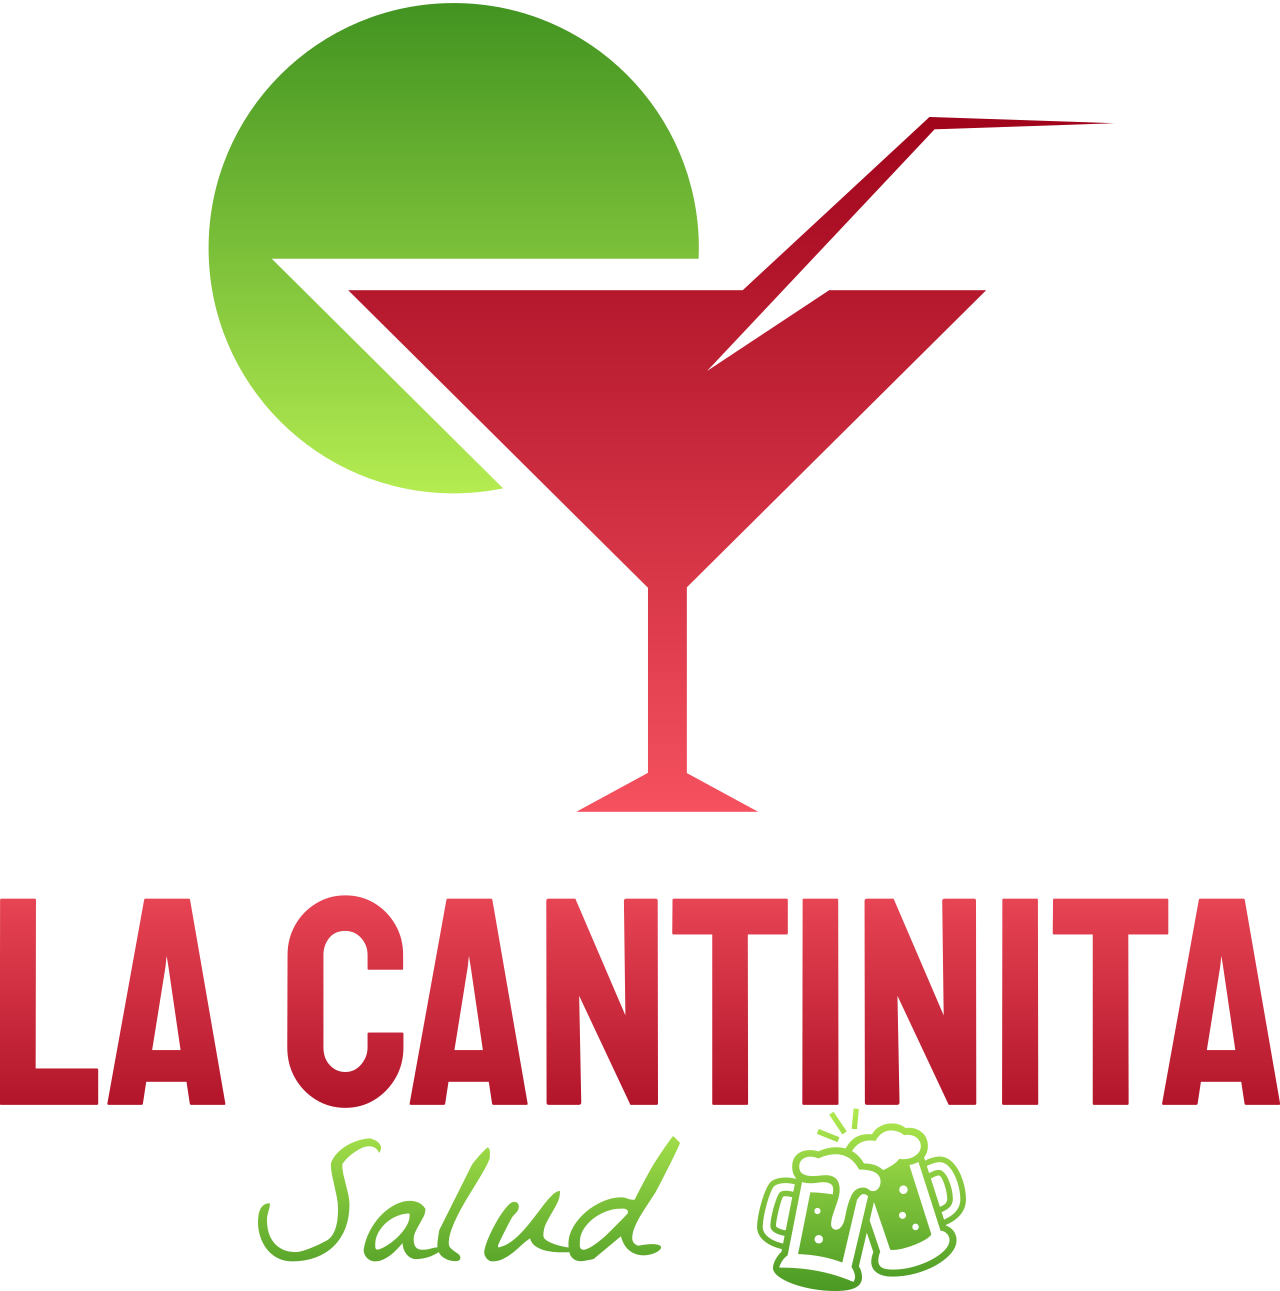 La Cantinita 's logo